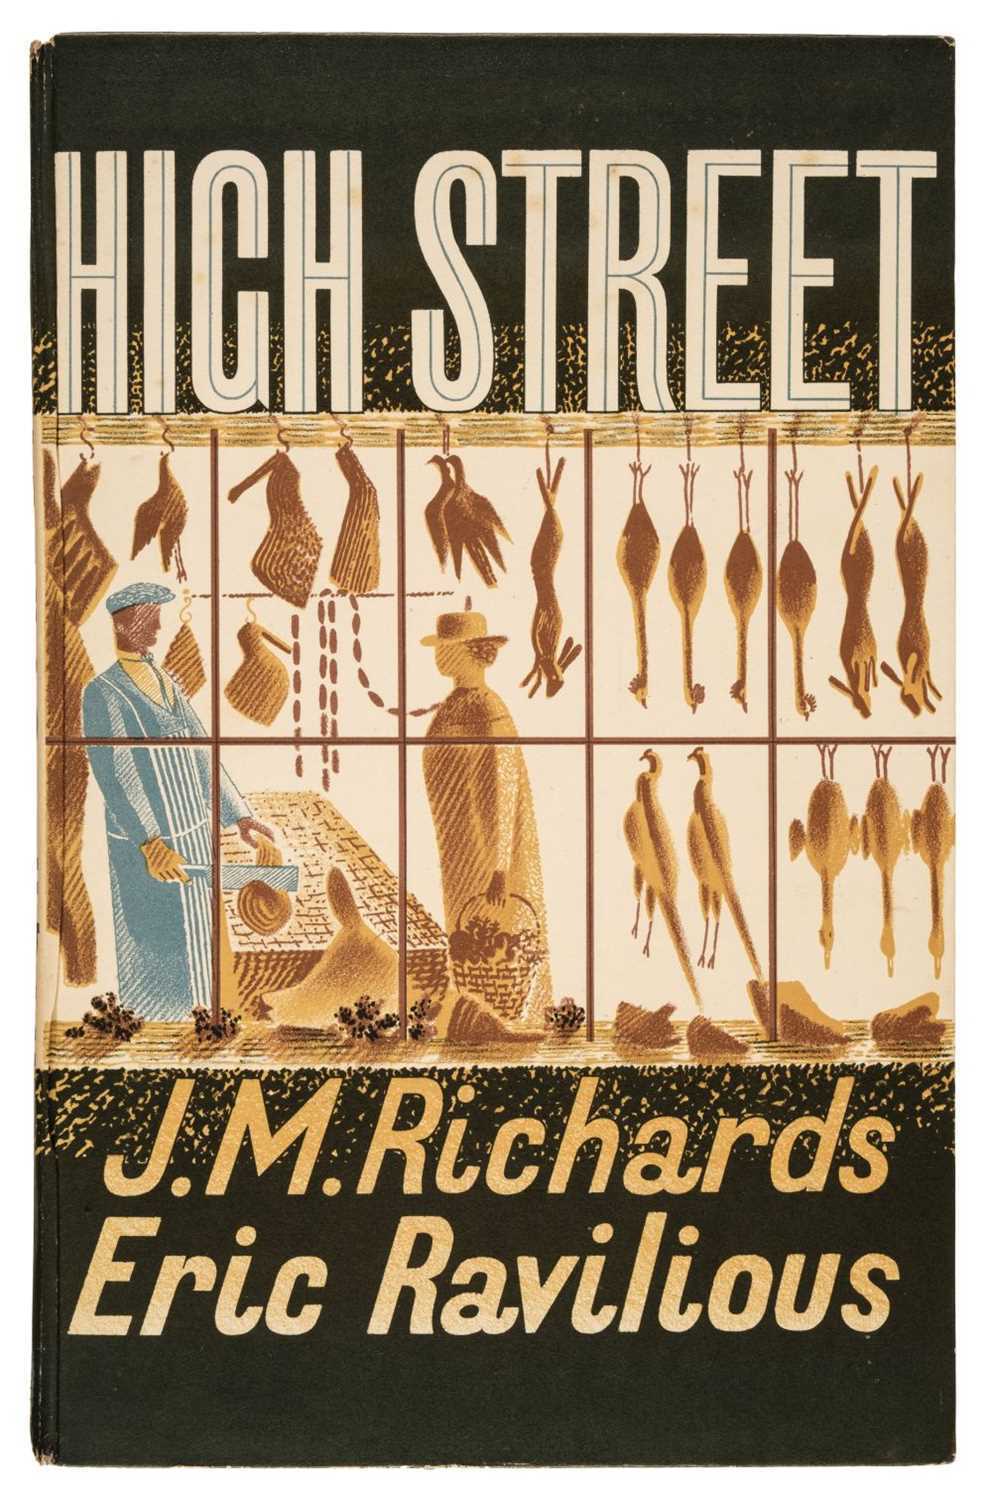 Lot 572 - Richards (J.M. & Ravilious, Eric). High Street, 1st edition, 1938